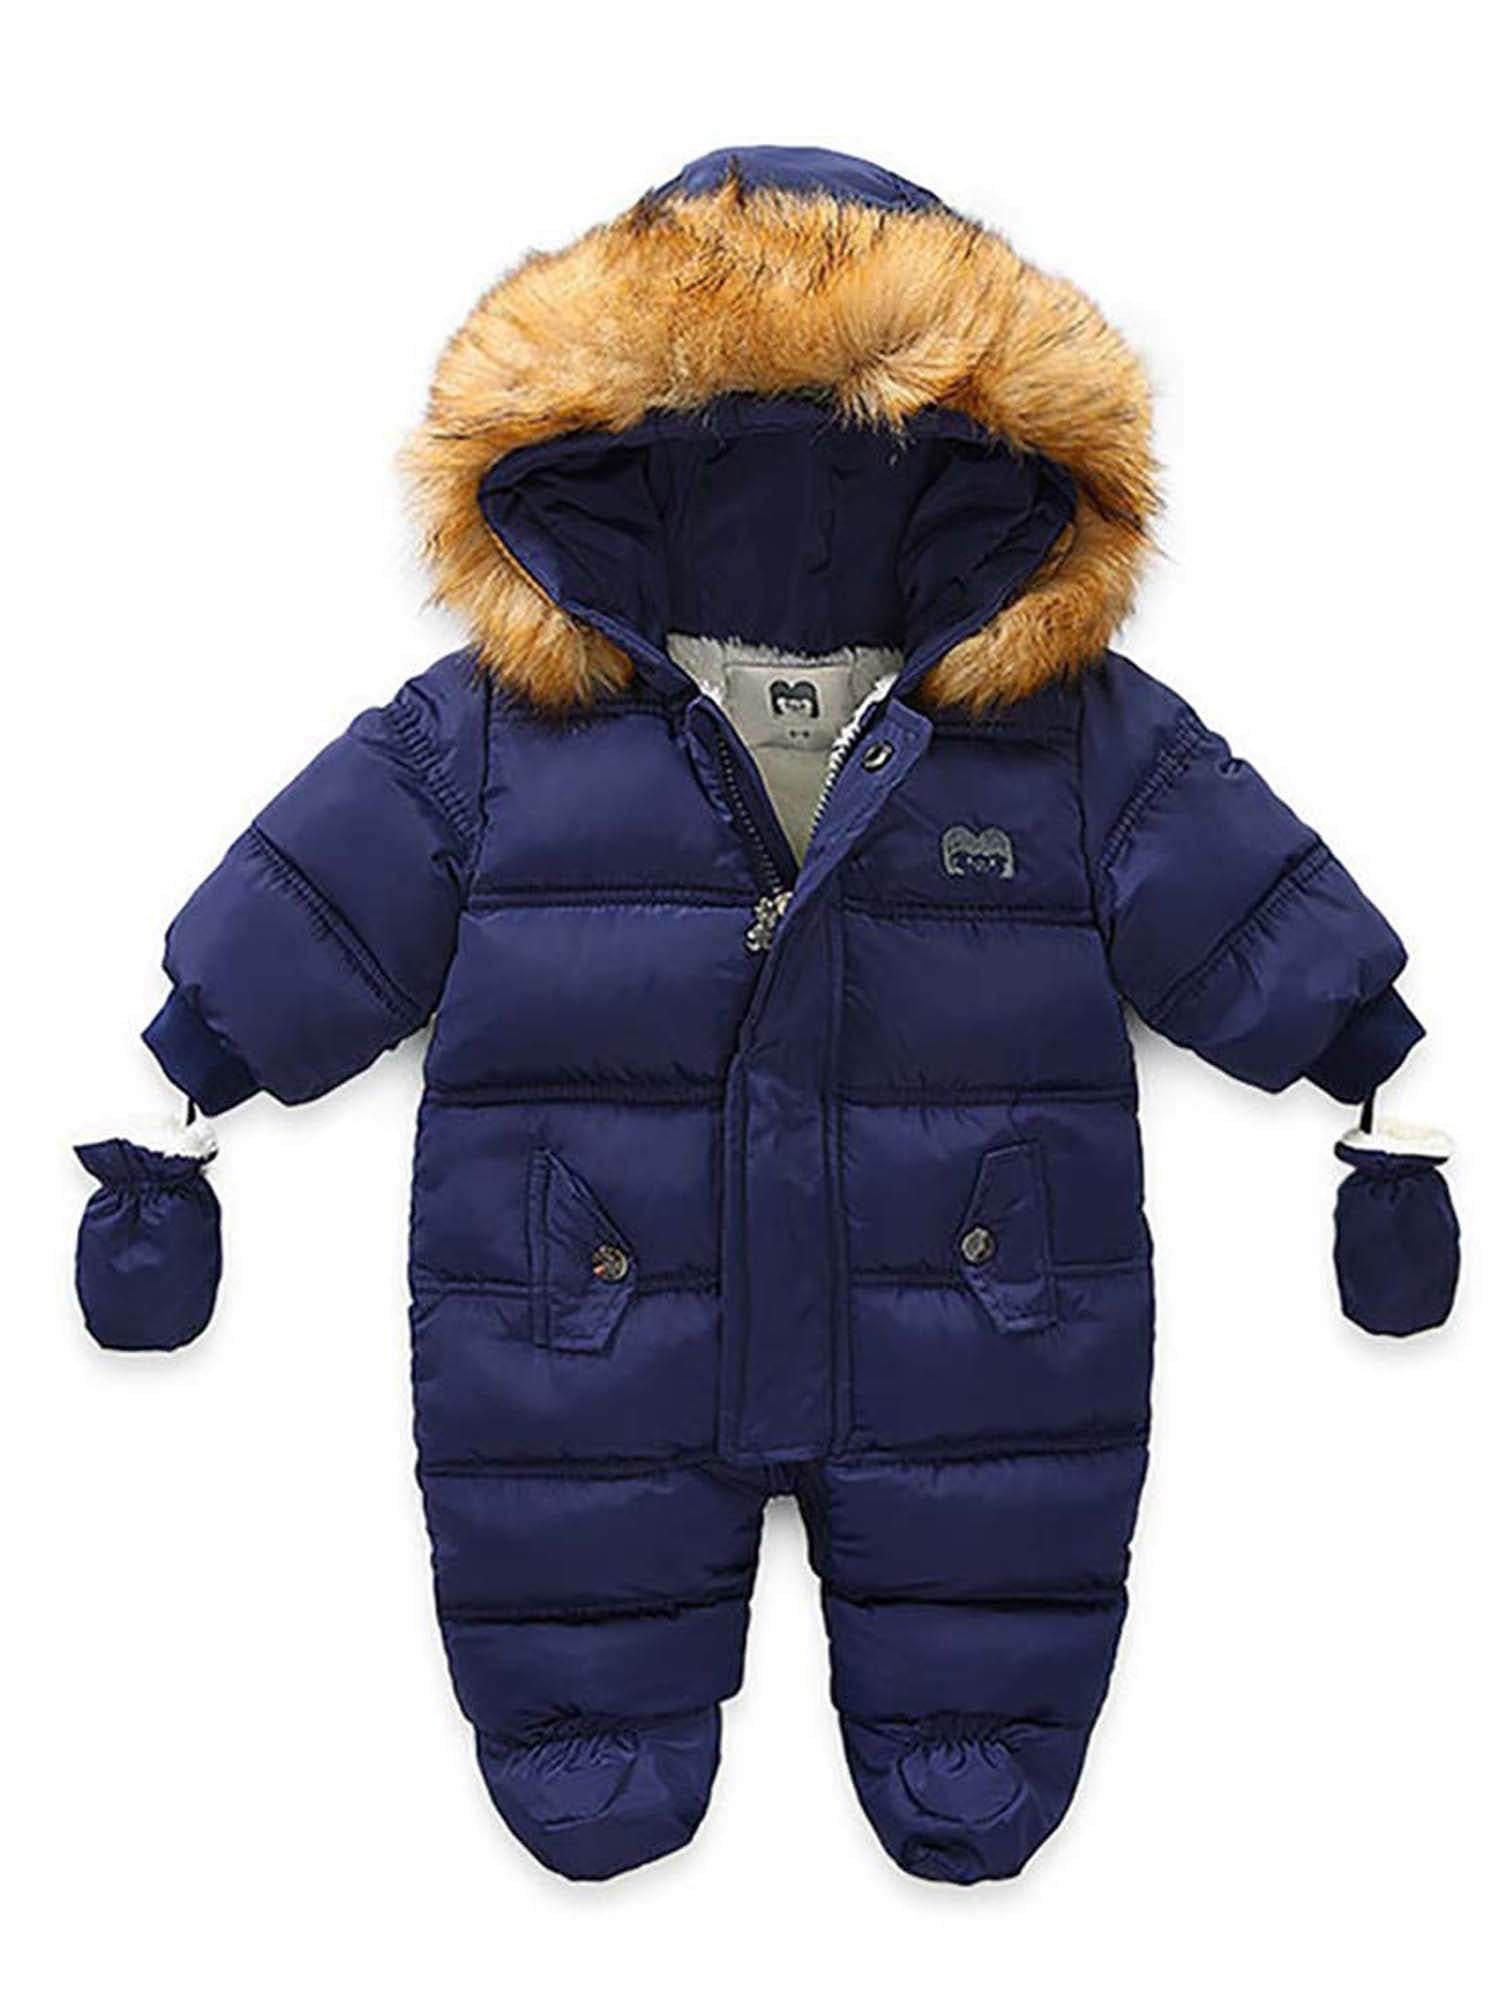 Details about   2019 winter children's clothing boys thick winter coat jacket children Coat YJ1 